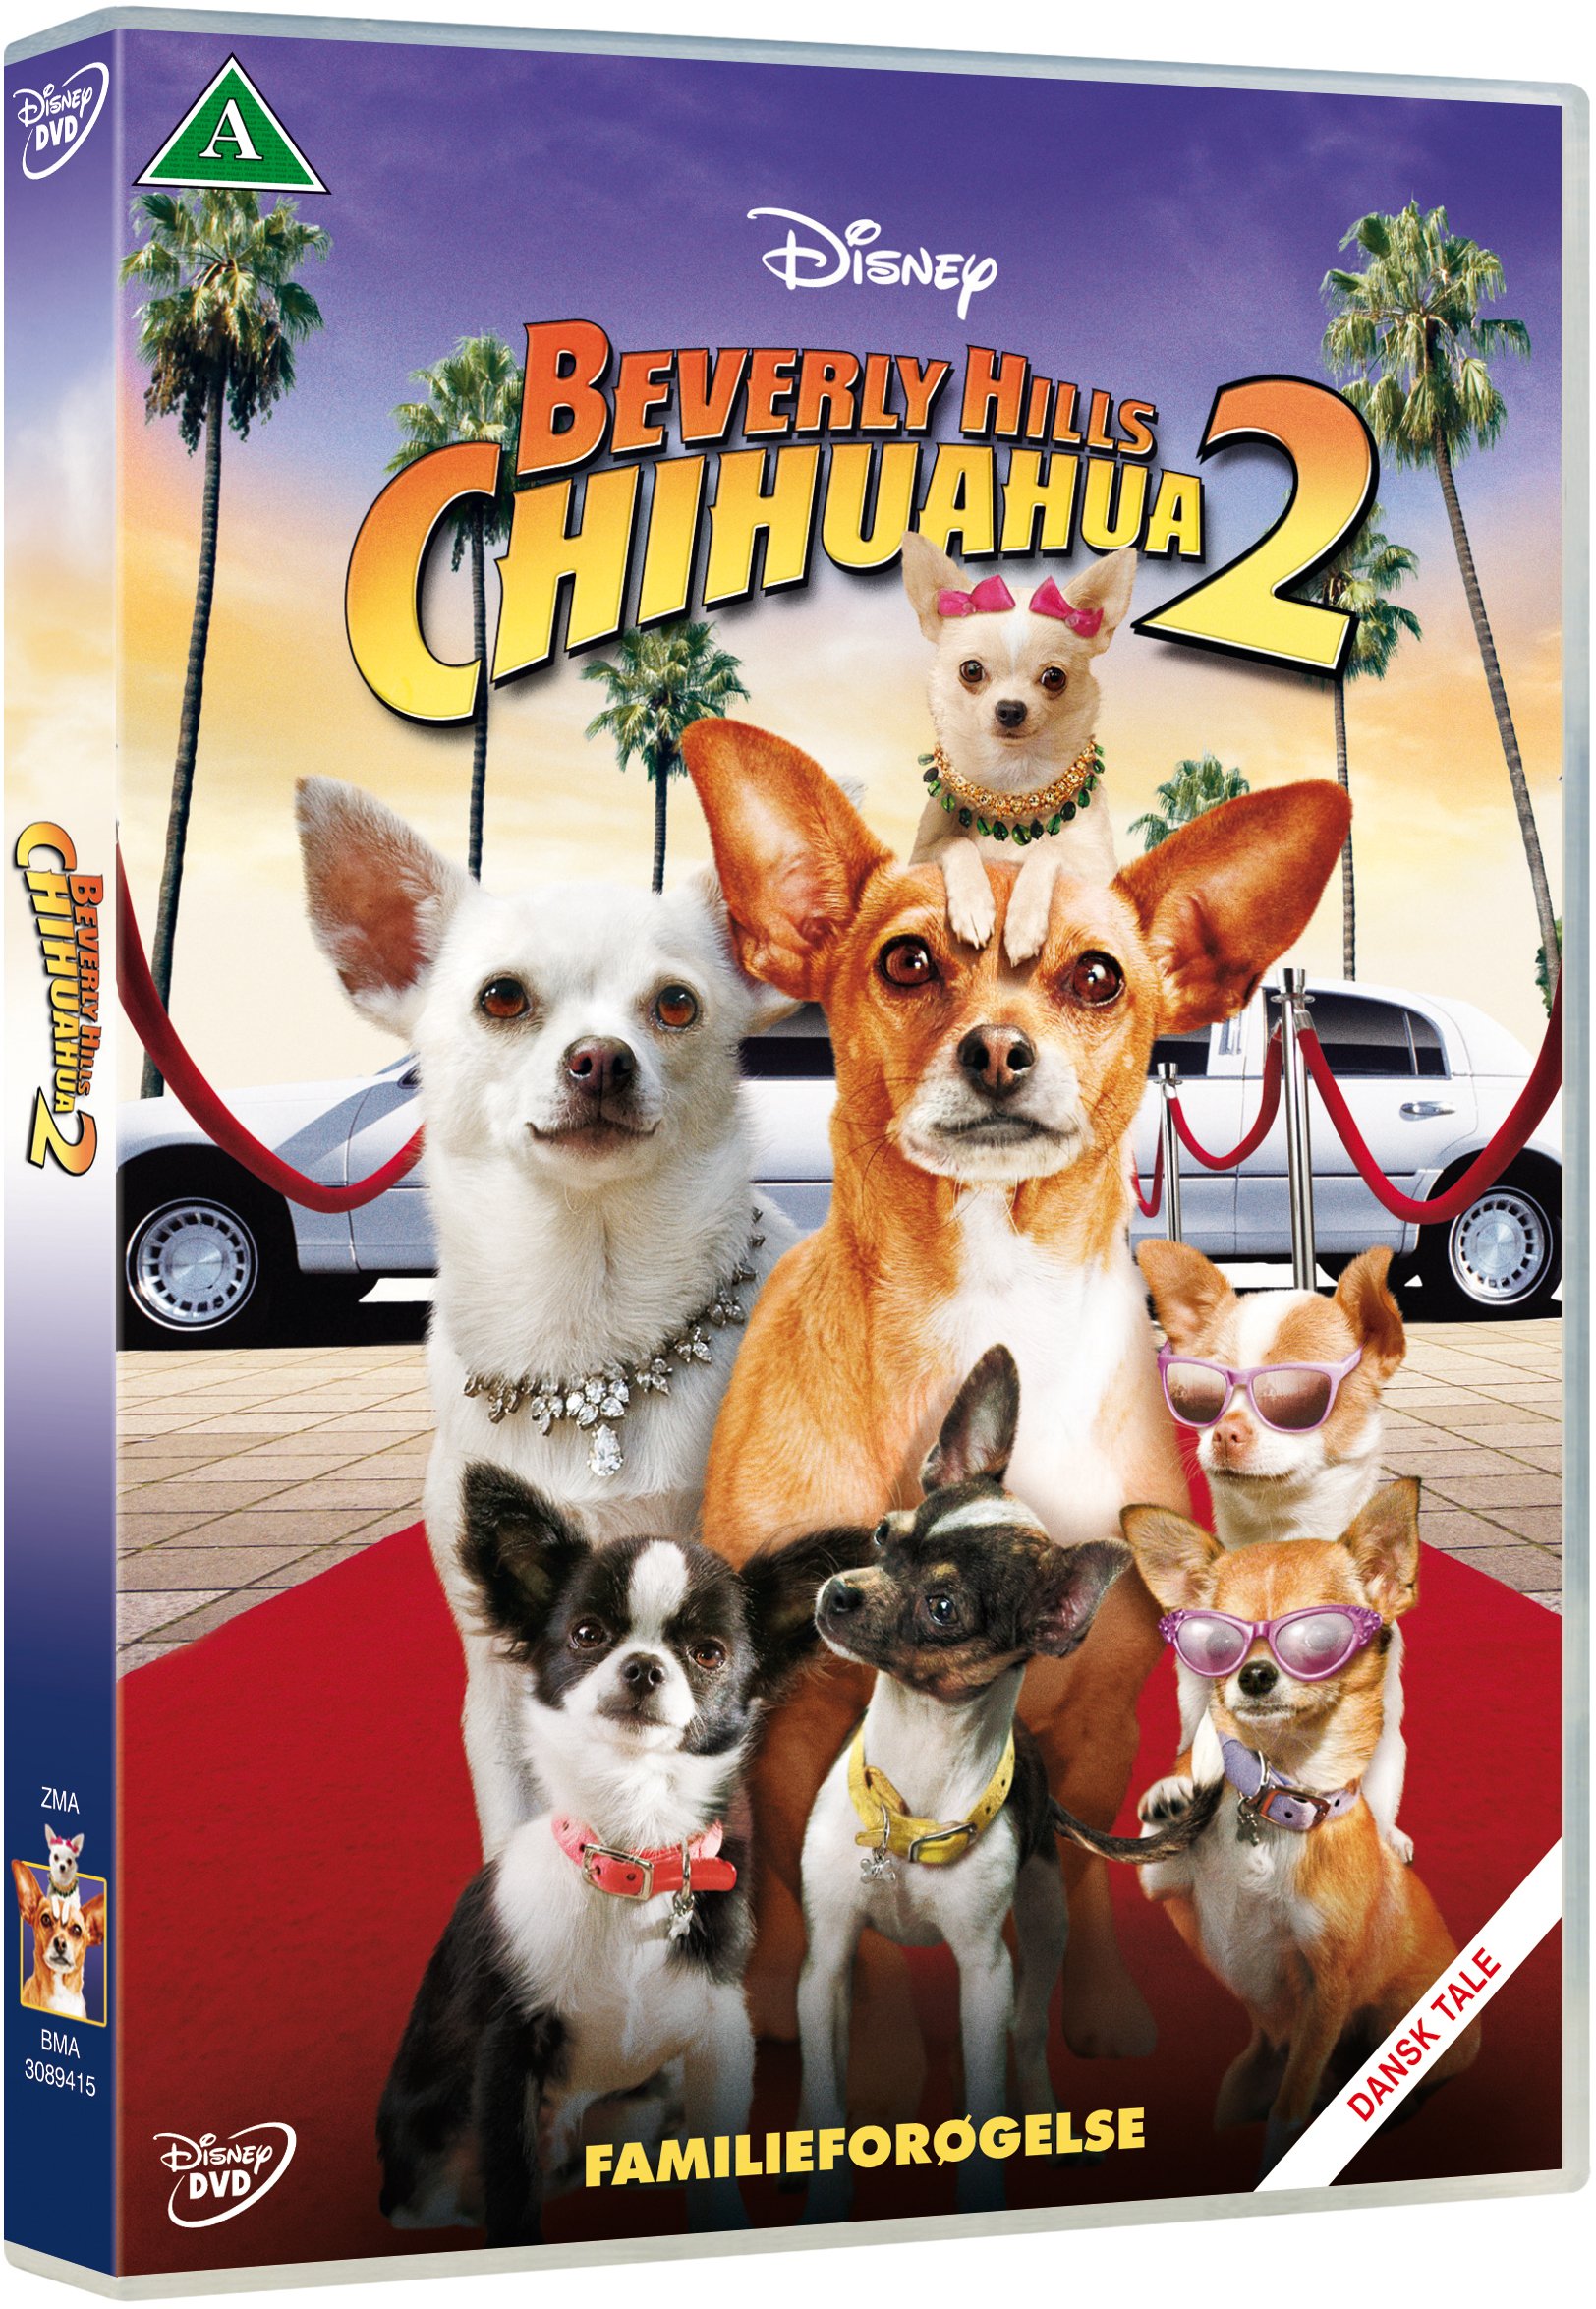 Disneys - Beverly Hills Chihuahua 2 - DVD